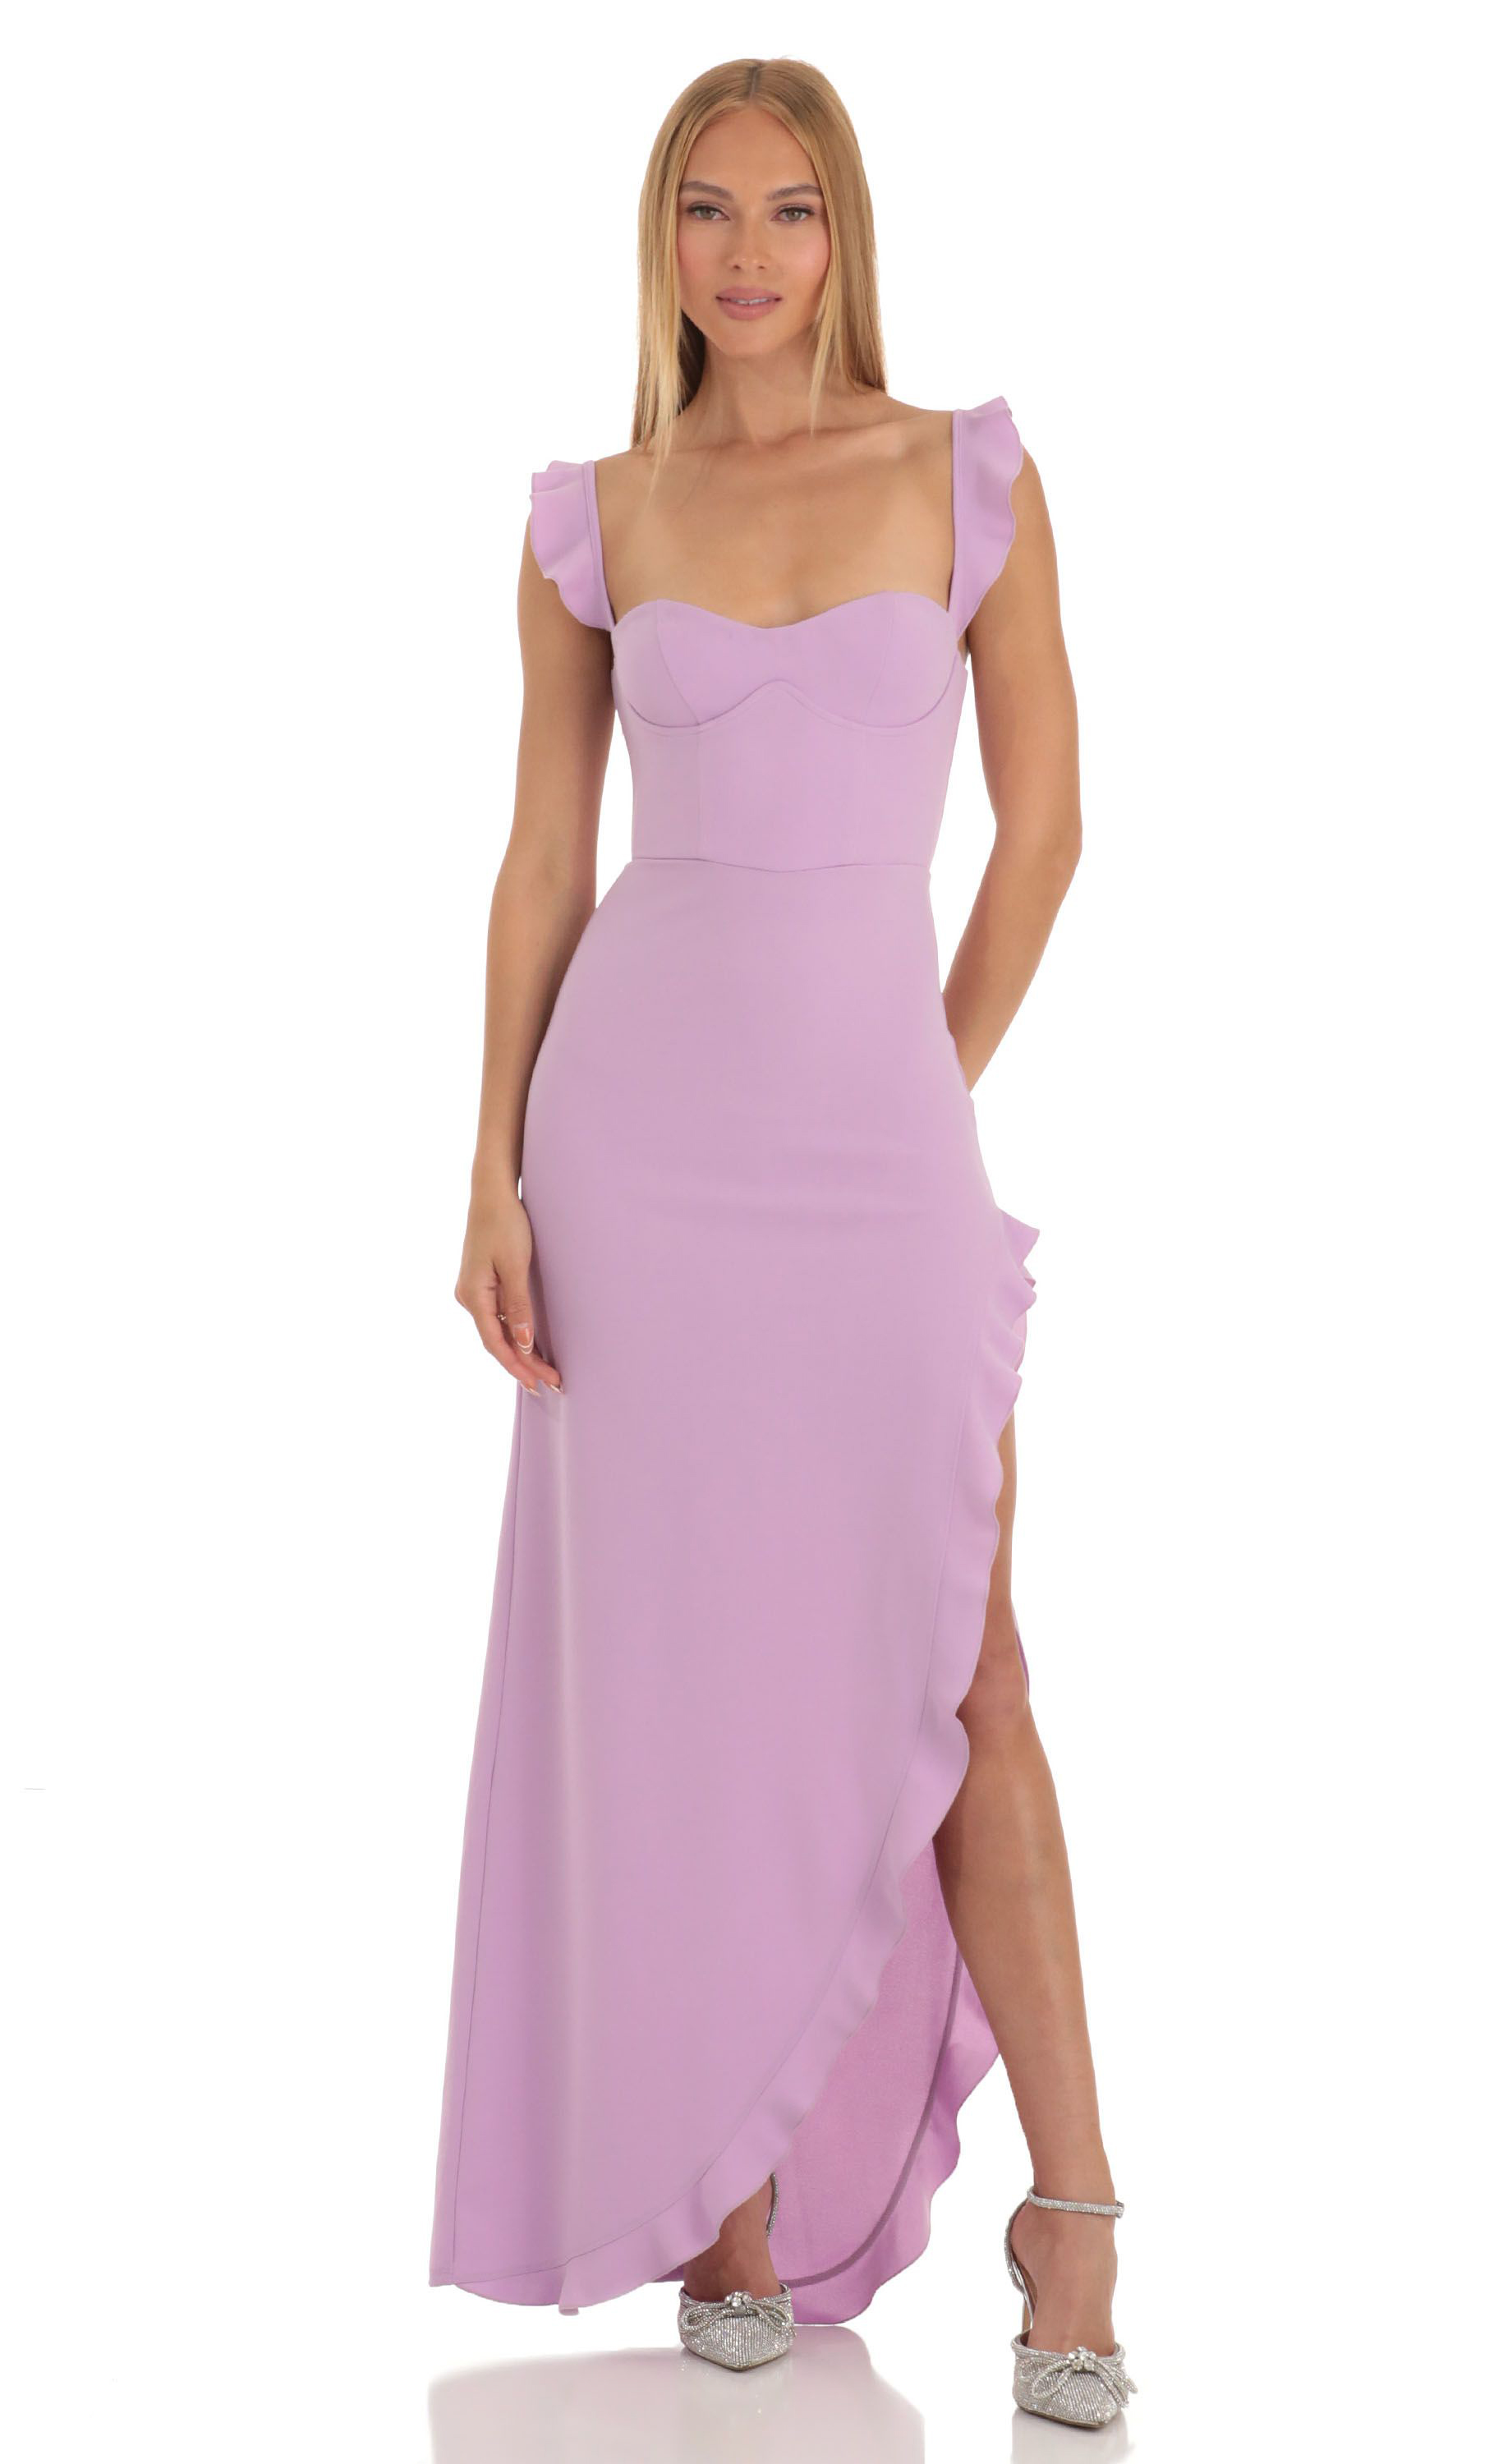 Venus Satin Ruffle Dress in Lavender